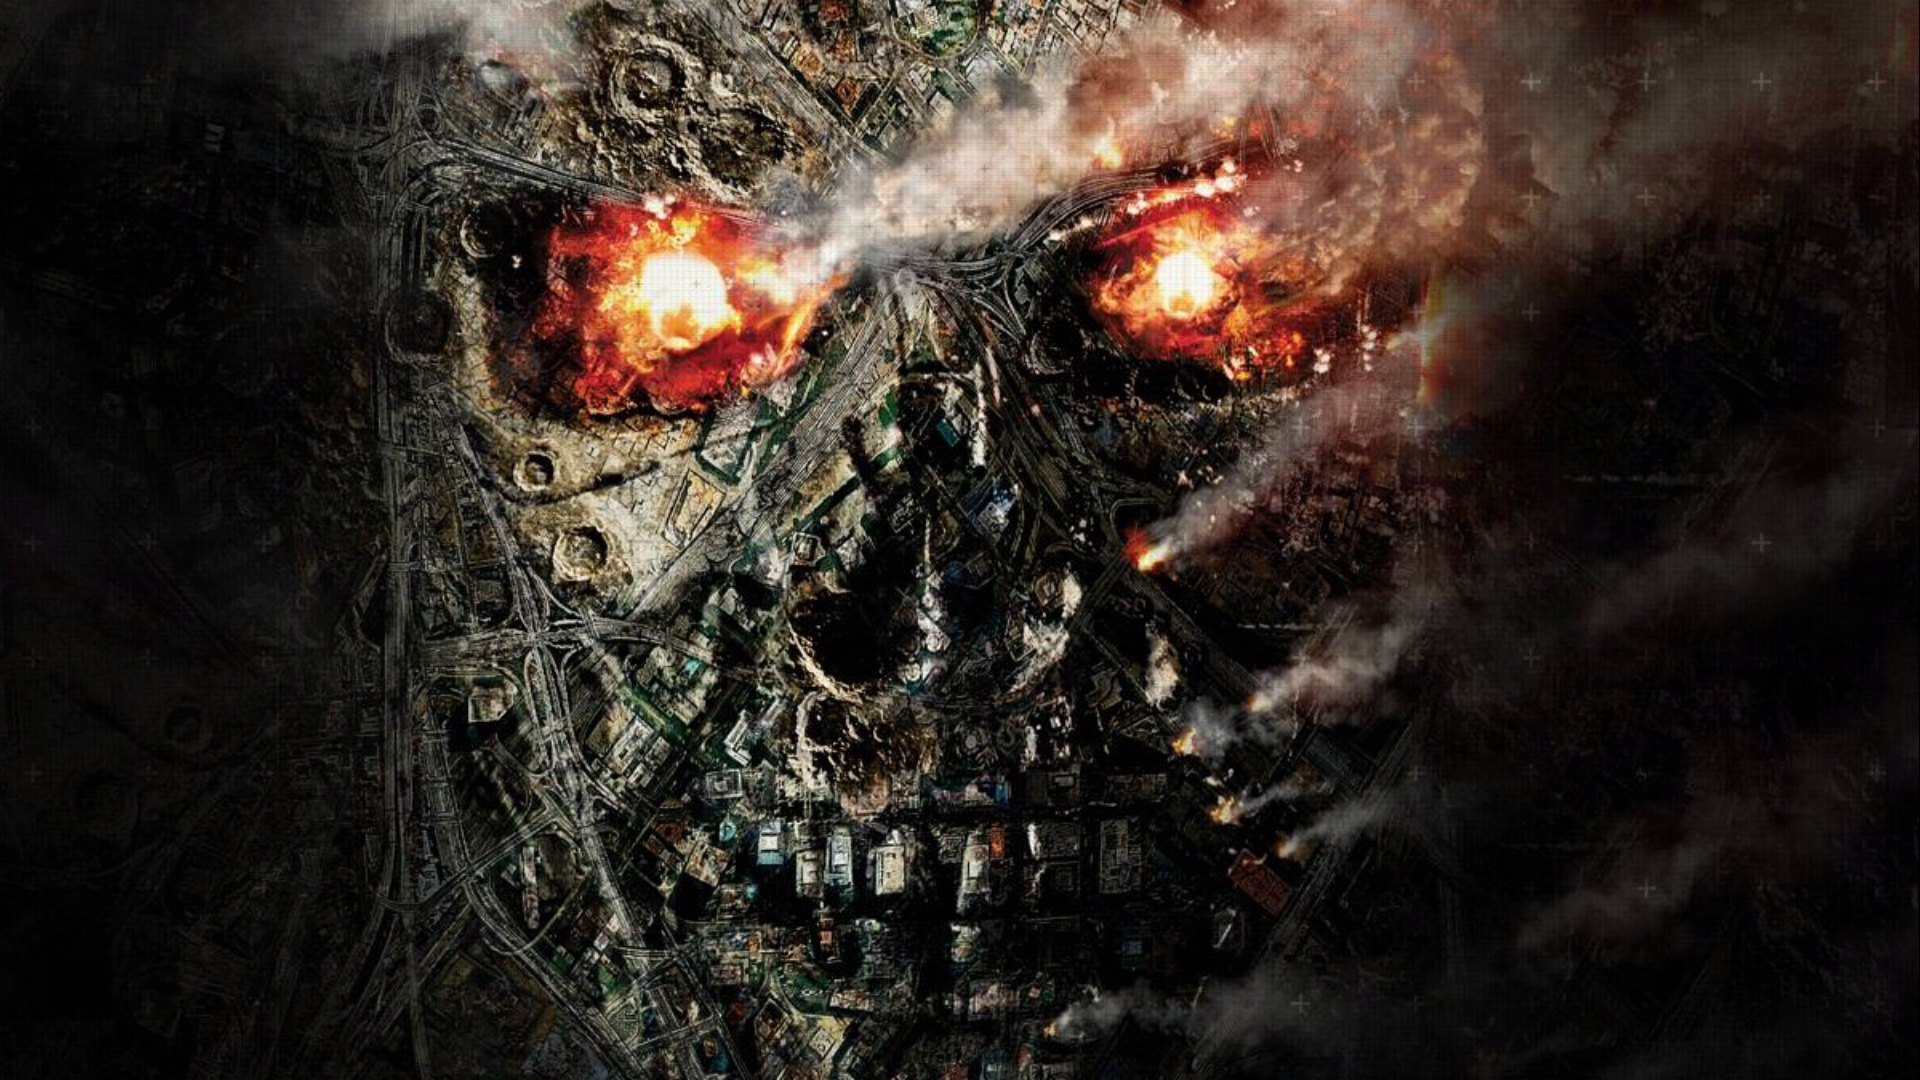 Terminator Genesis Full HD Wallpaper And Background